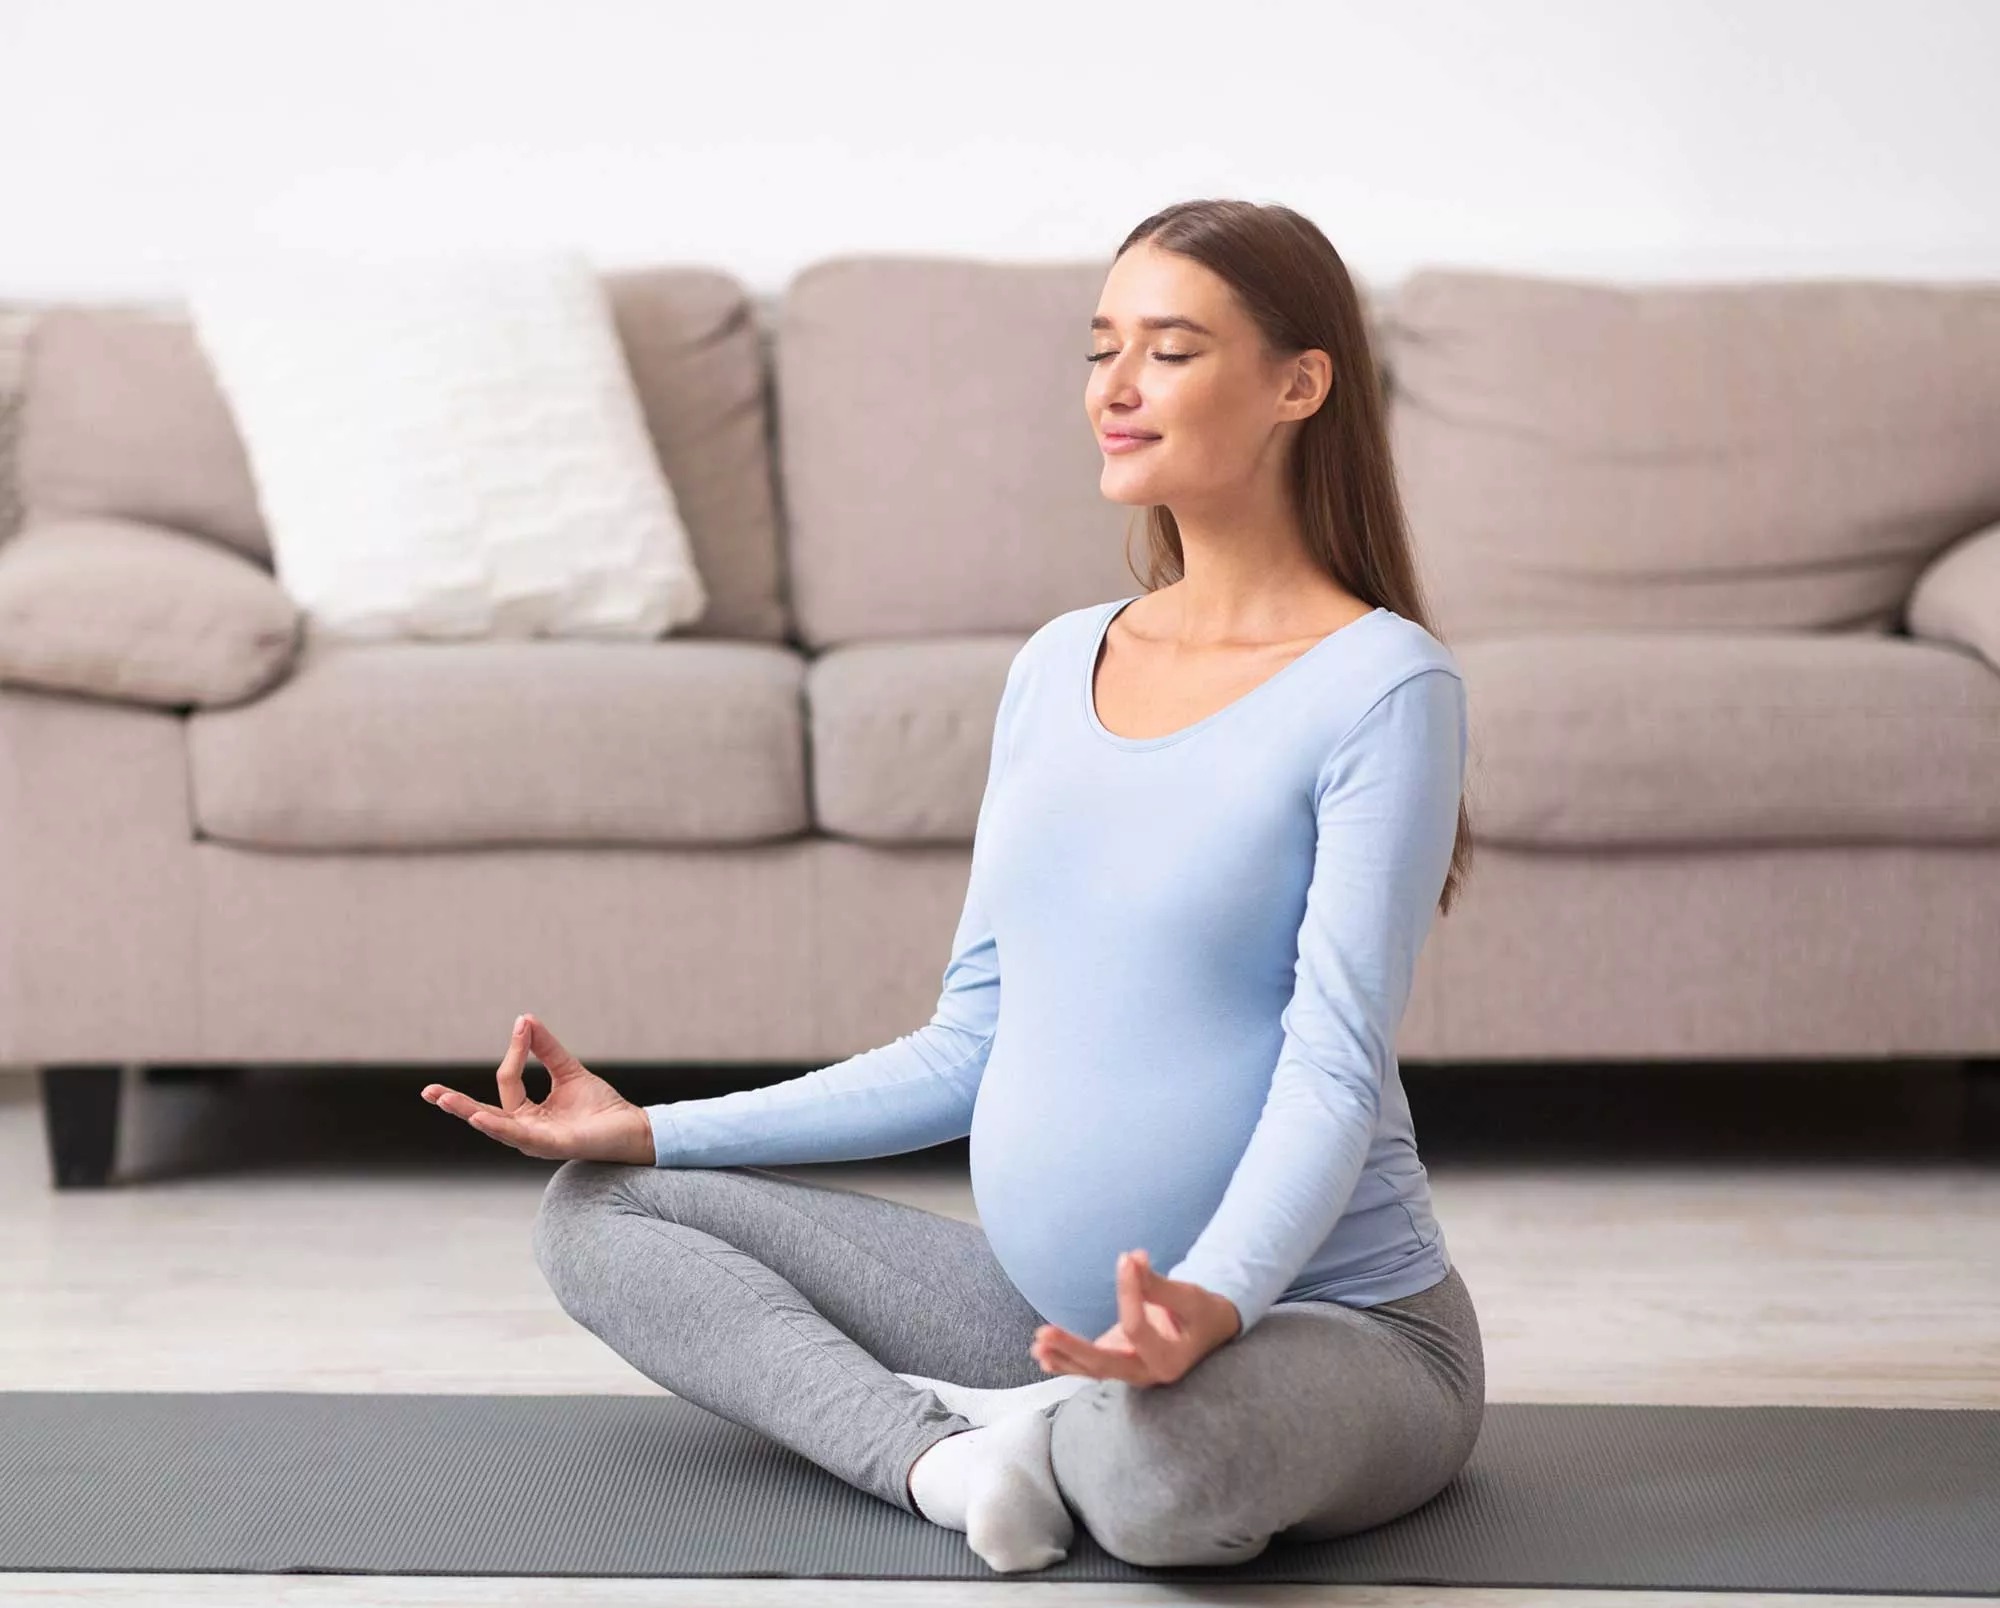 Can You Do Yoga While Pregnant?